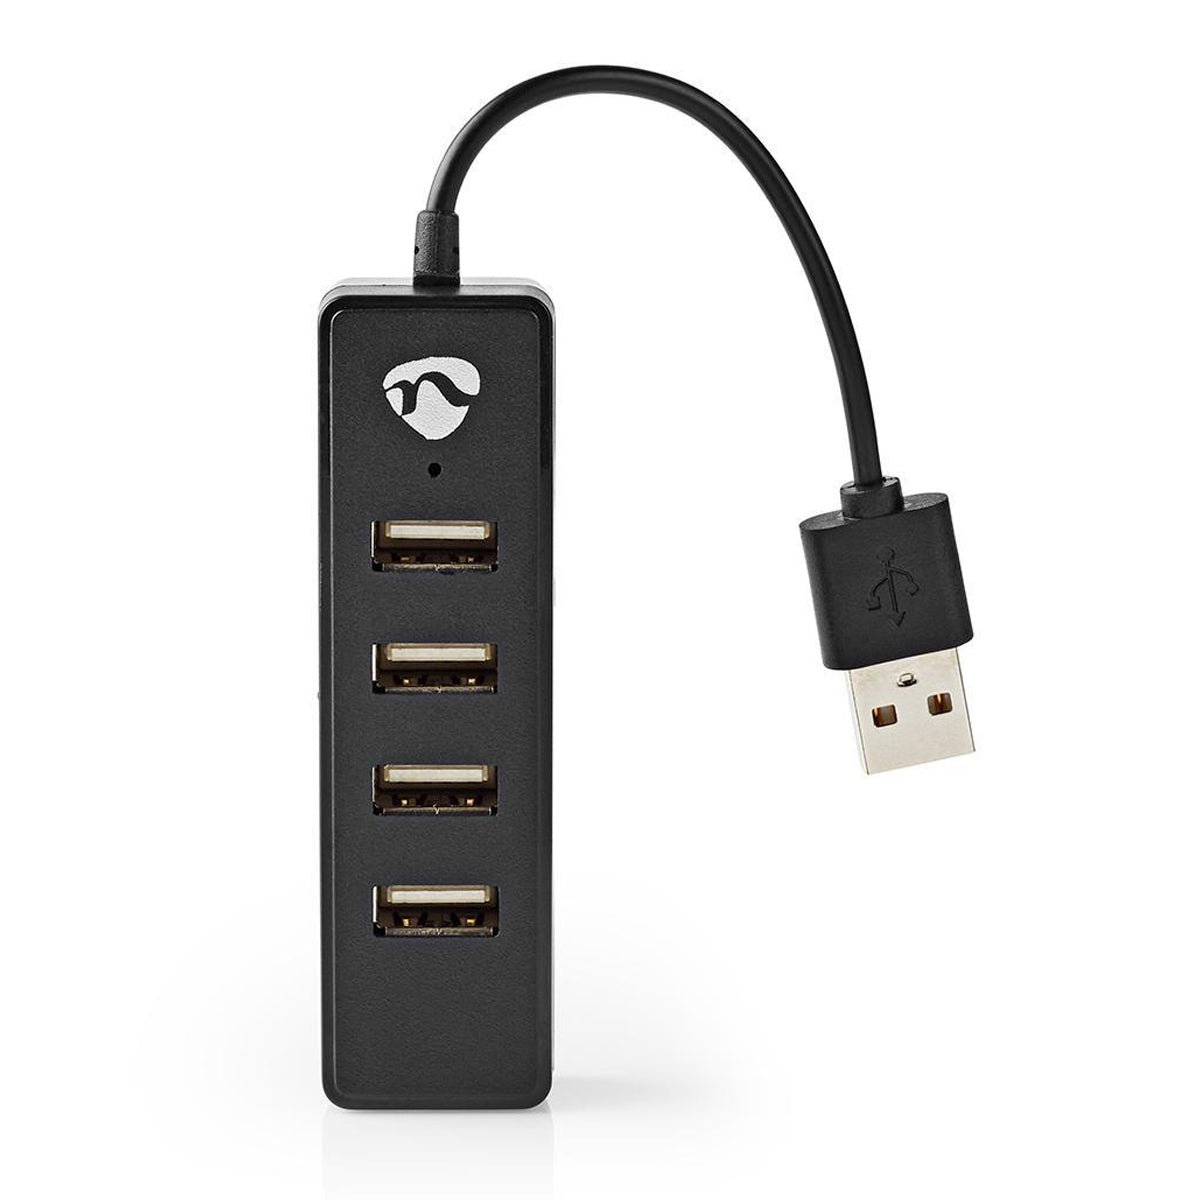 Nedis USB 2.0 multiport hub, 4 USB-A input ports, plug&amp;play, USB power strip